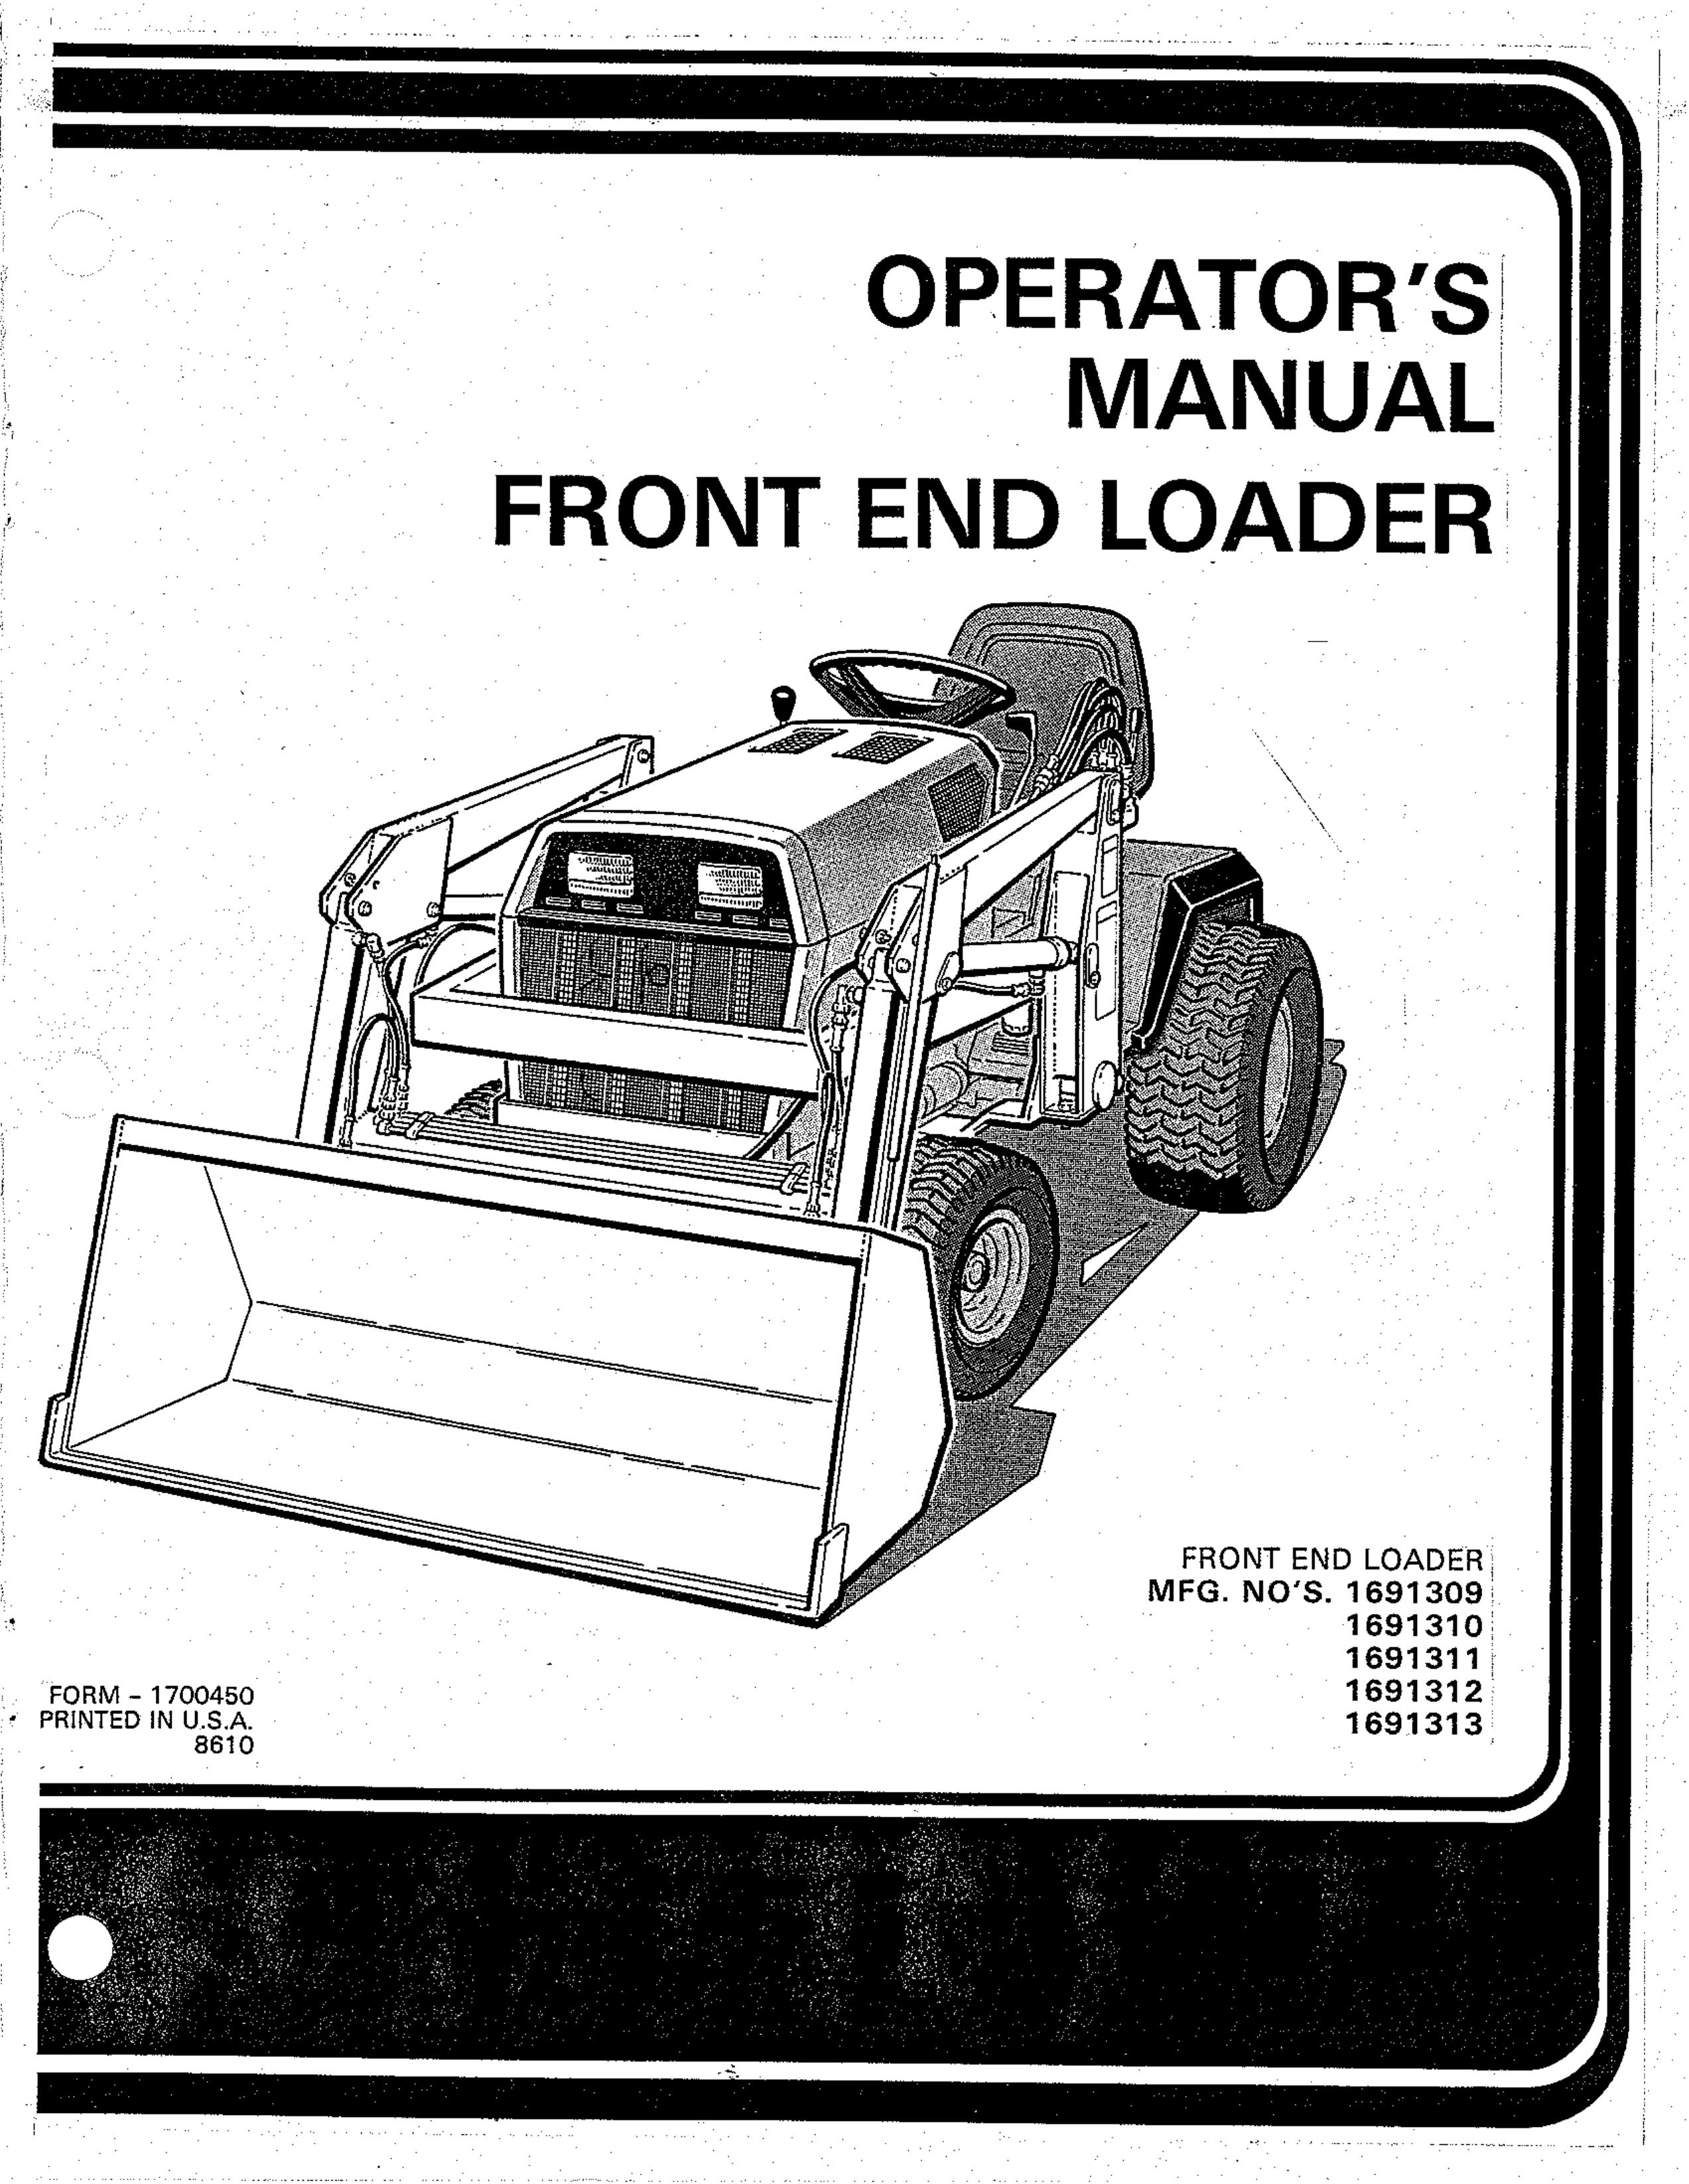 Snapper 1691310 Compact Loader User Manual